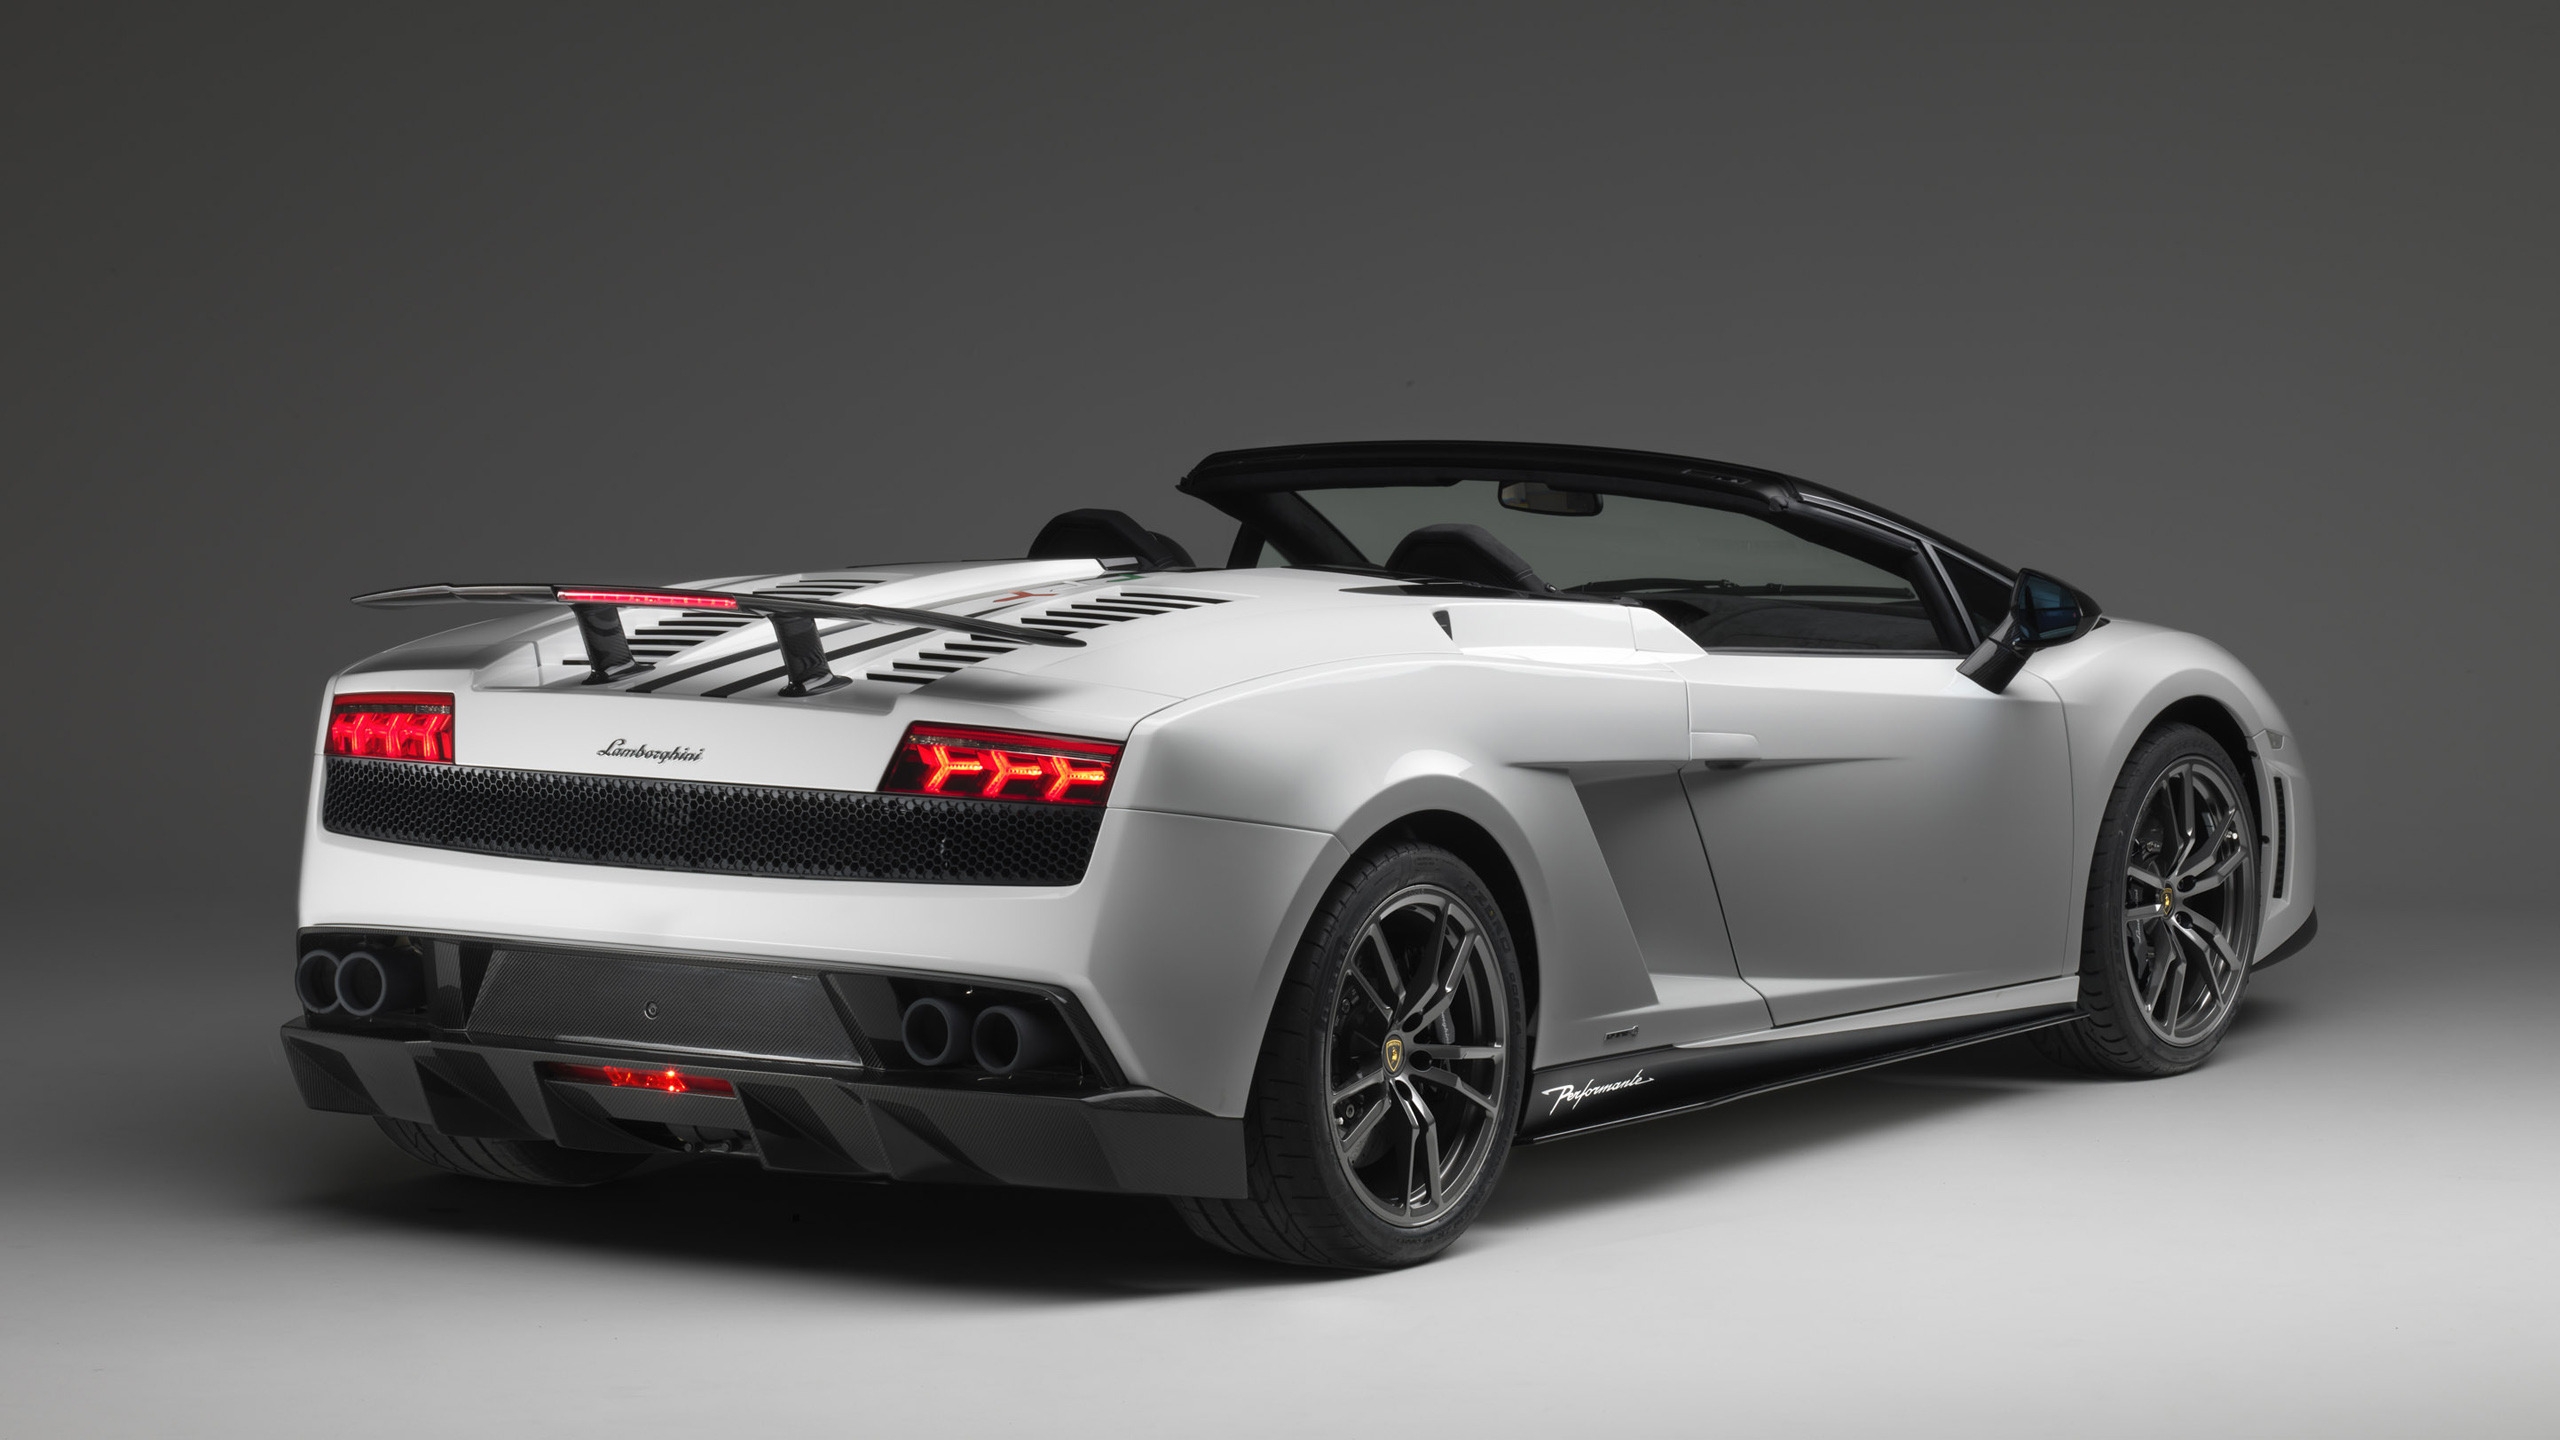 Lamborghini Gallardo LP 570 4 Spyder for 2560x1440 HDTV resolution